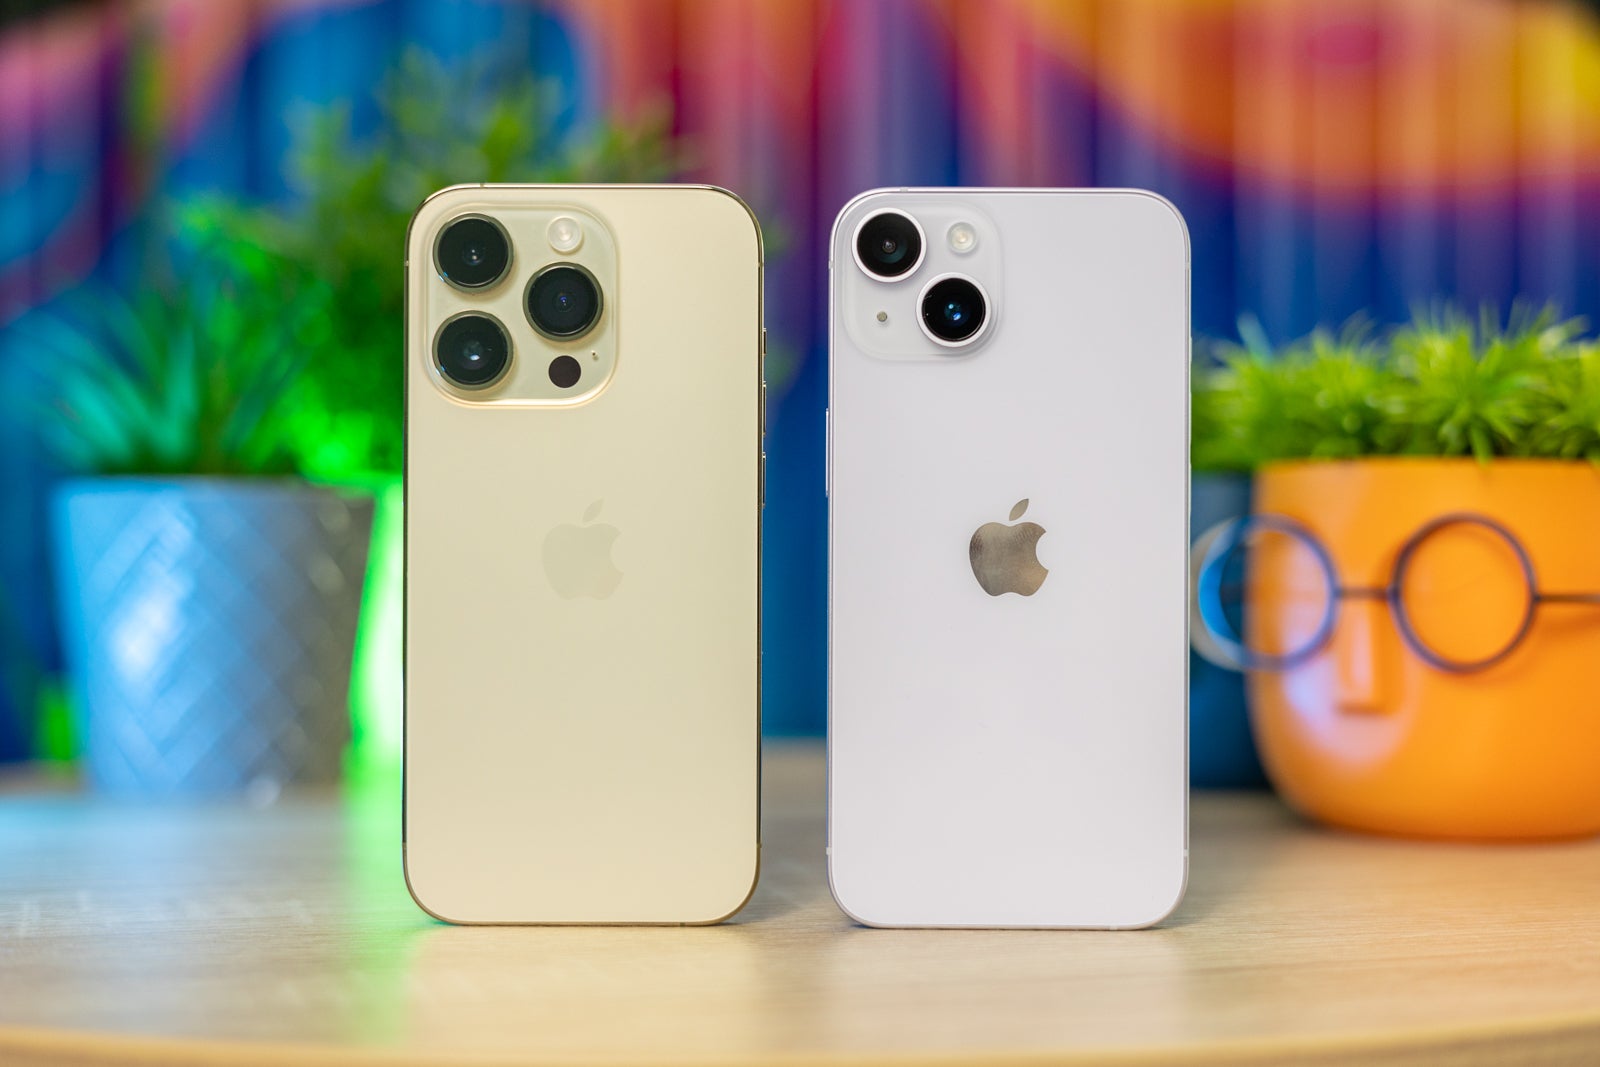 (Image Credit - PhoneArena) iPhone 14 Pro vs iPhone 14 - Apple iPhone 14 Pro vs iPhone 14: one is new, the other is not